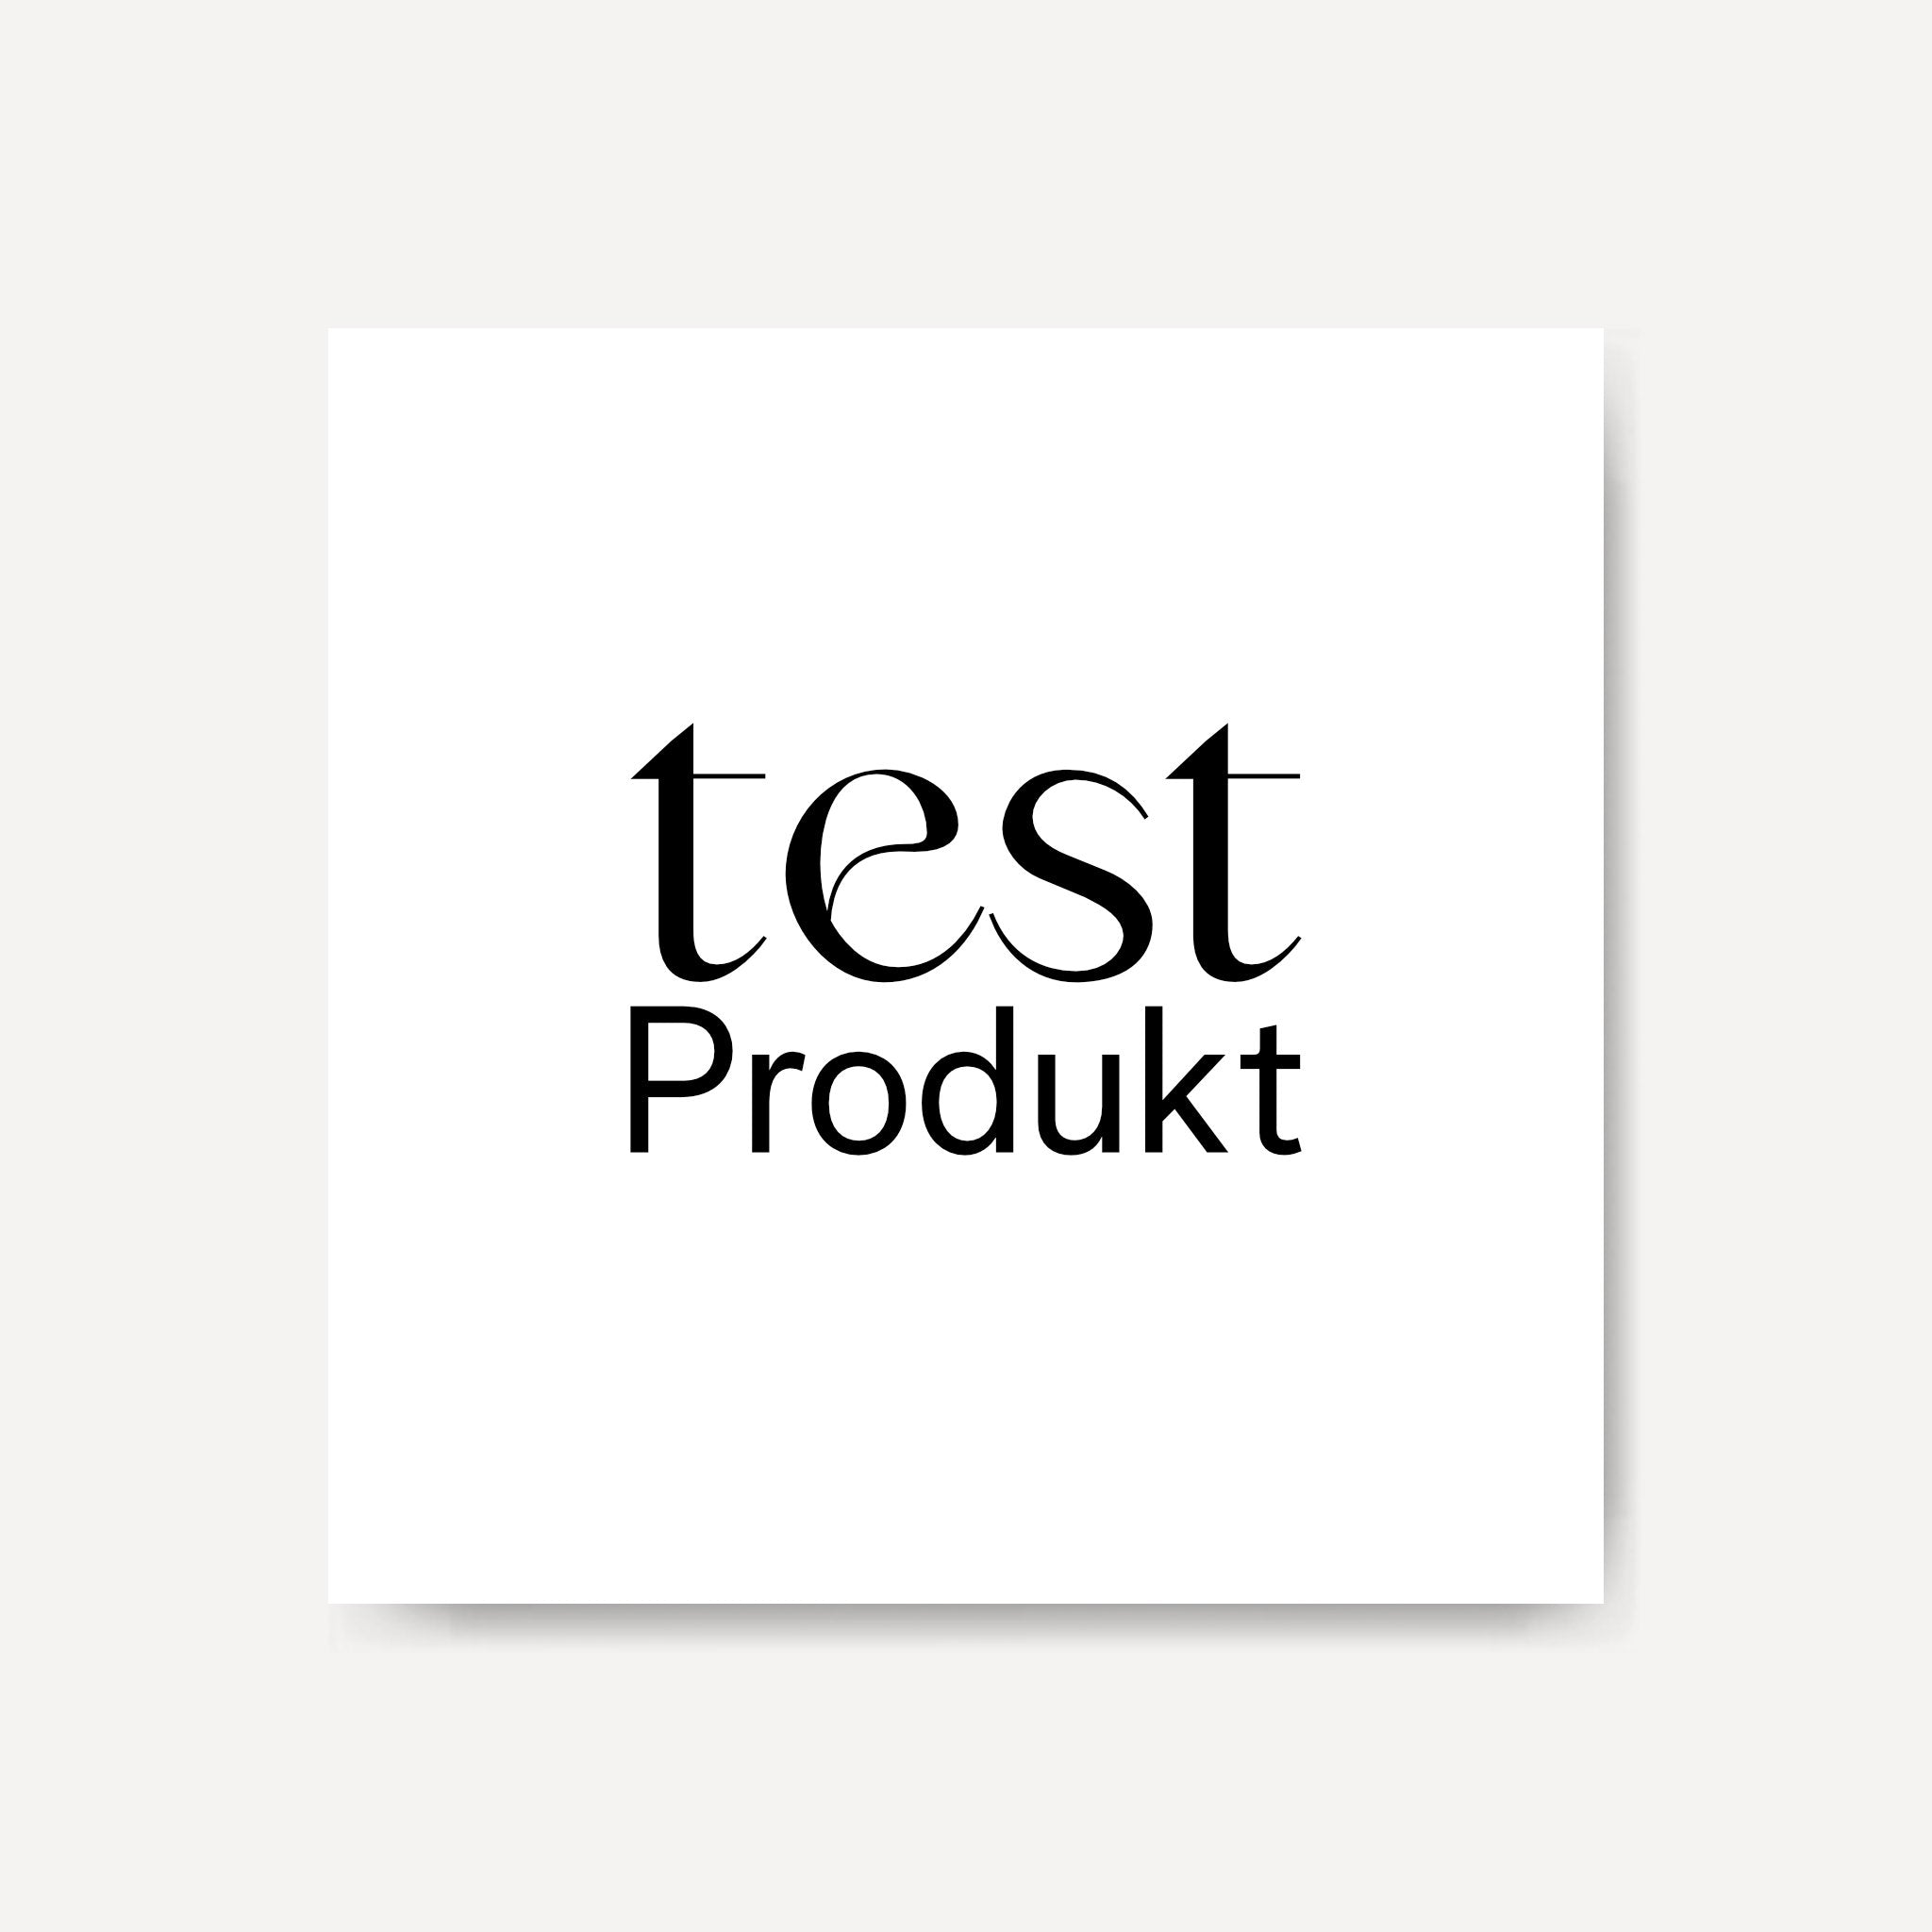 Testprodukt_4c6322cd-5447-476b-bd43-8a983acc9658.jpg